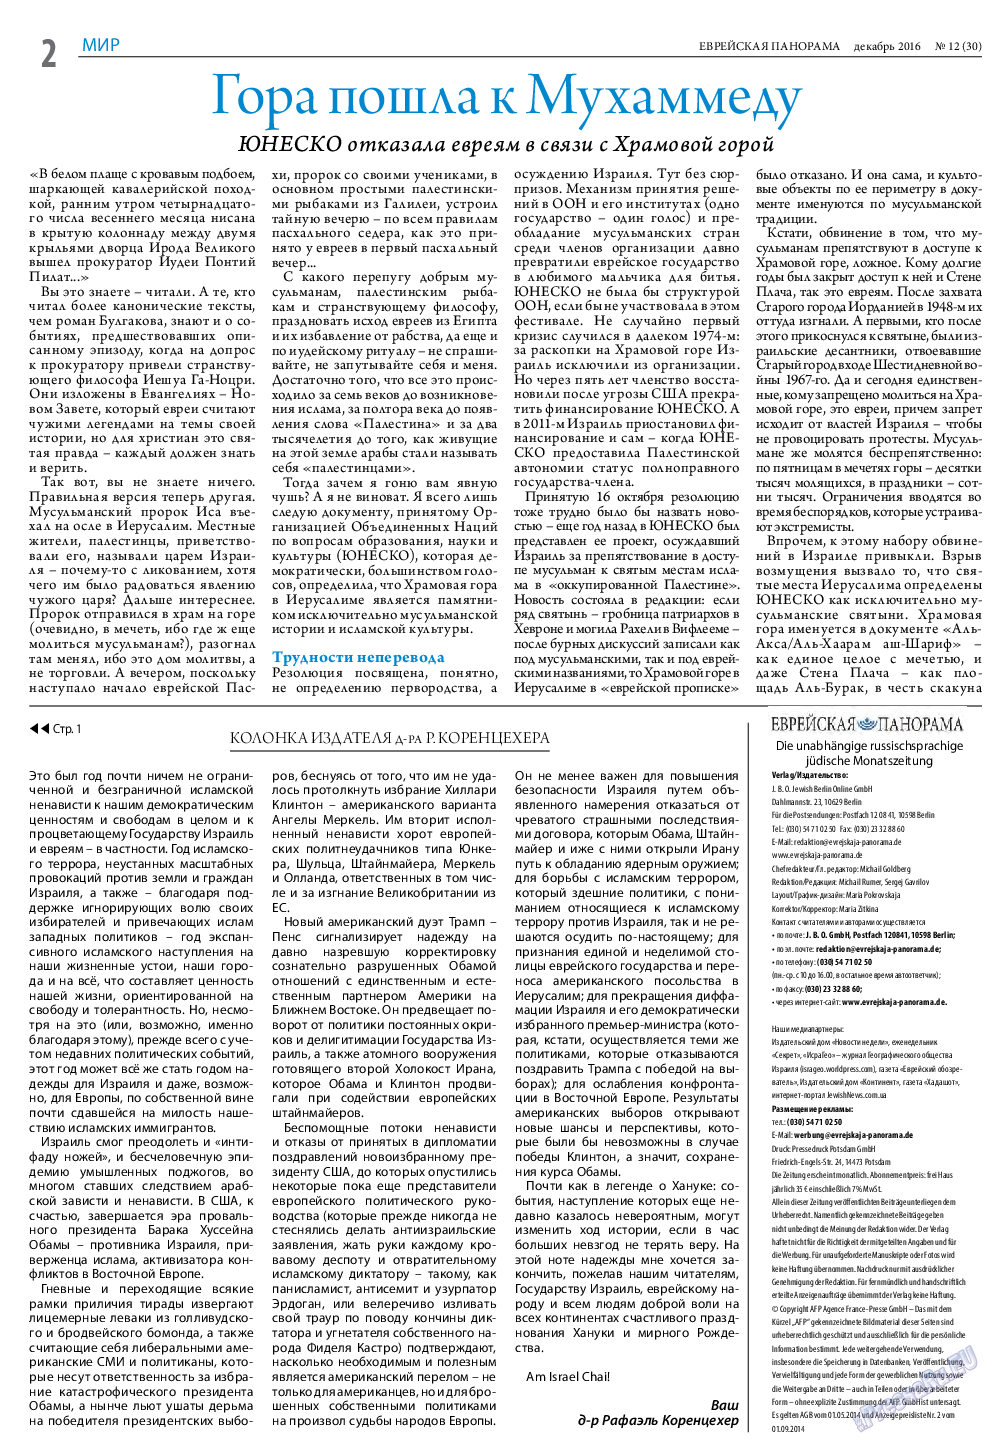 Еврейская панорама, газета. 2016 №12 стр.2